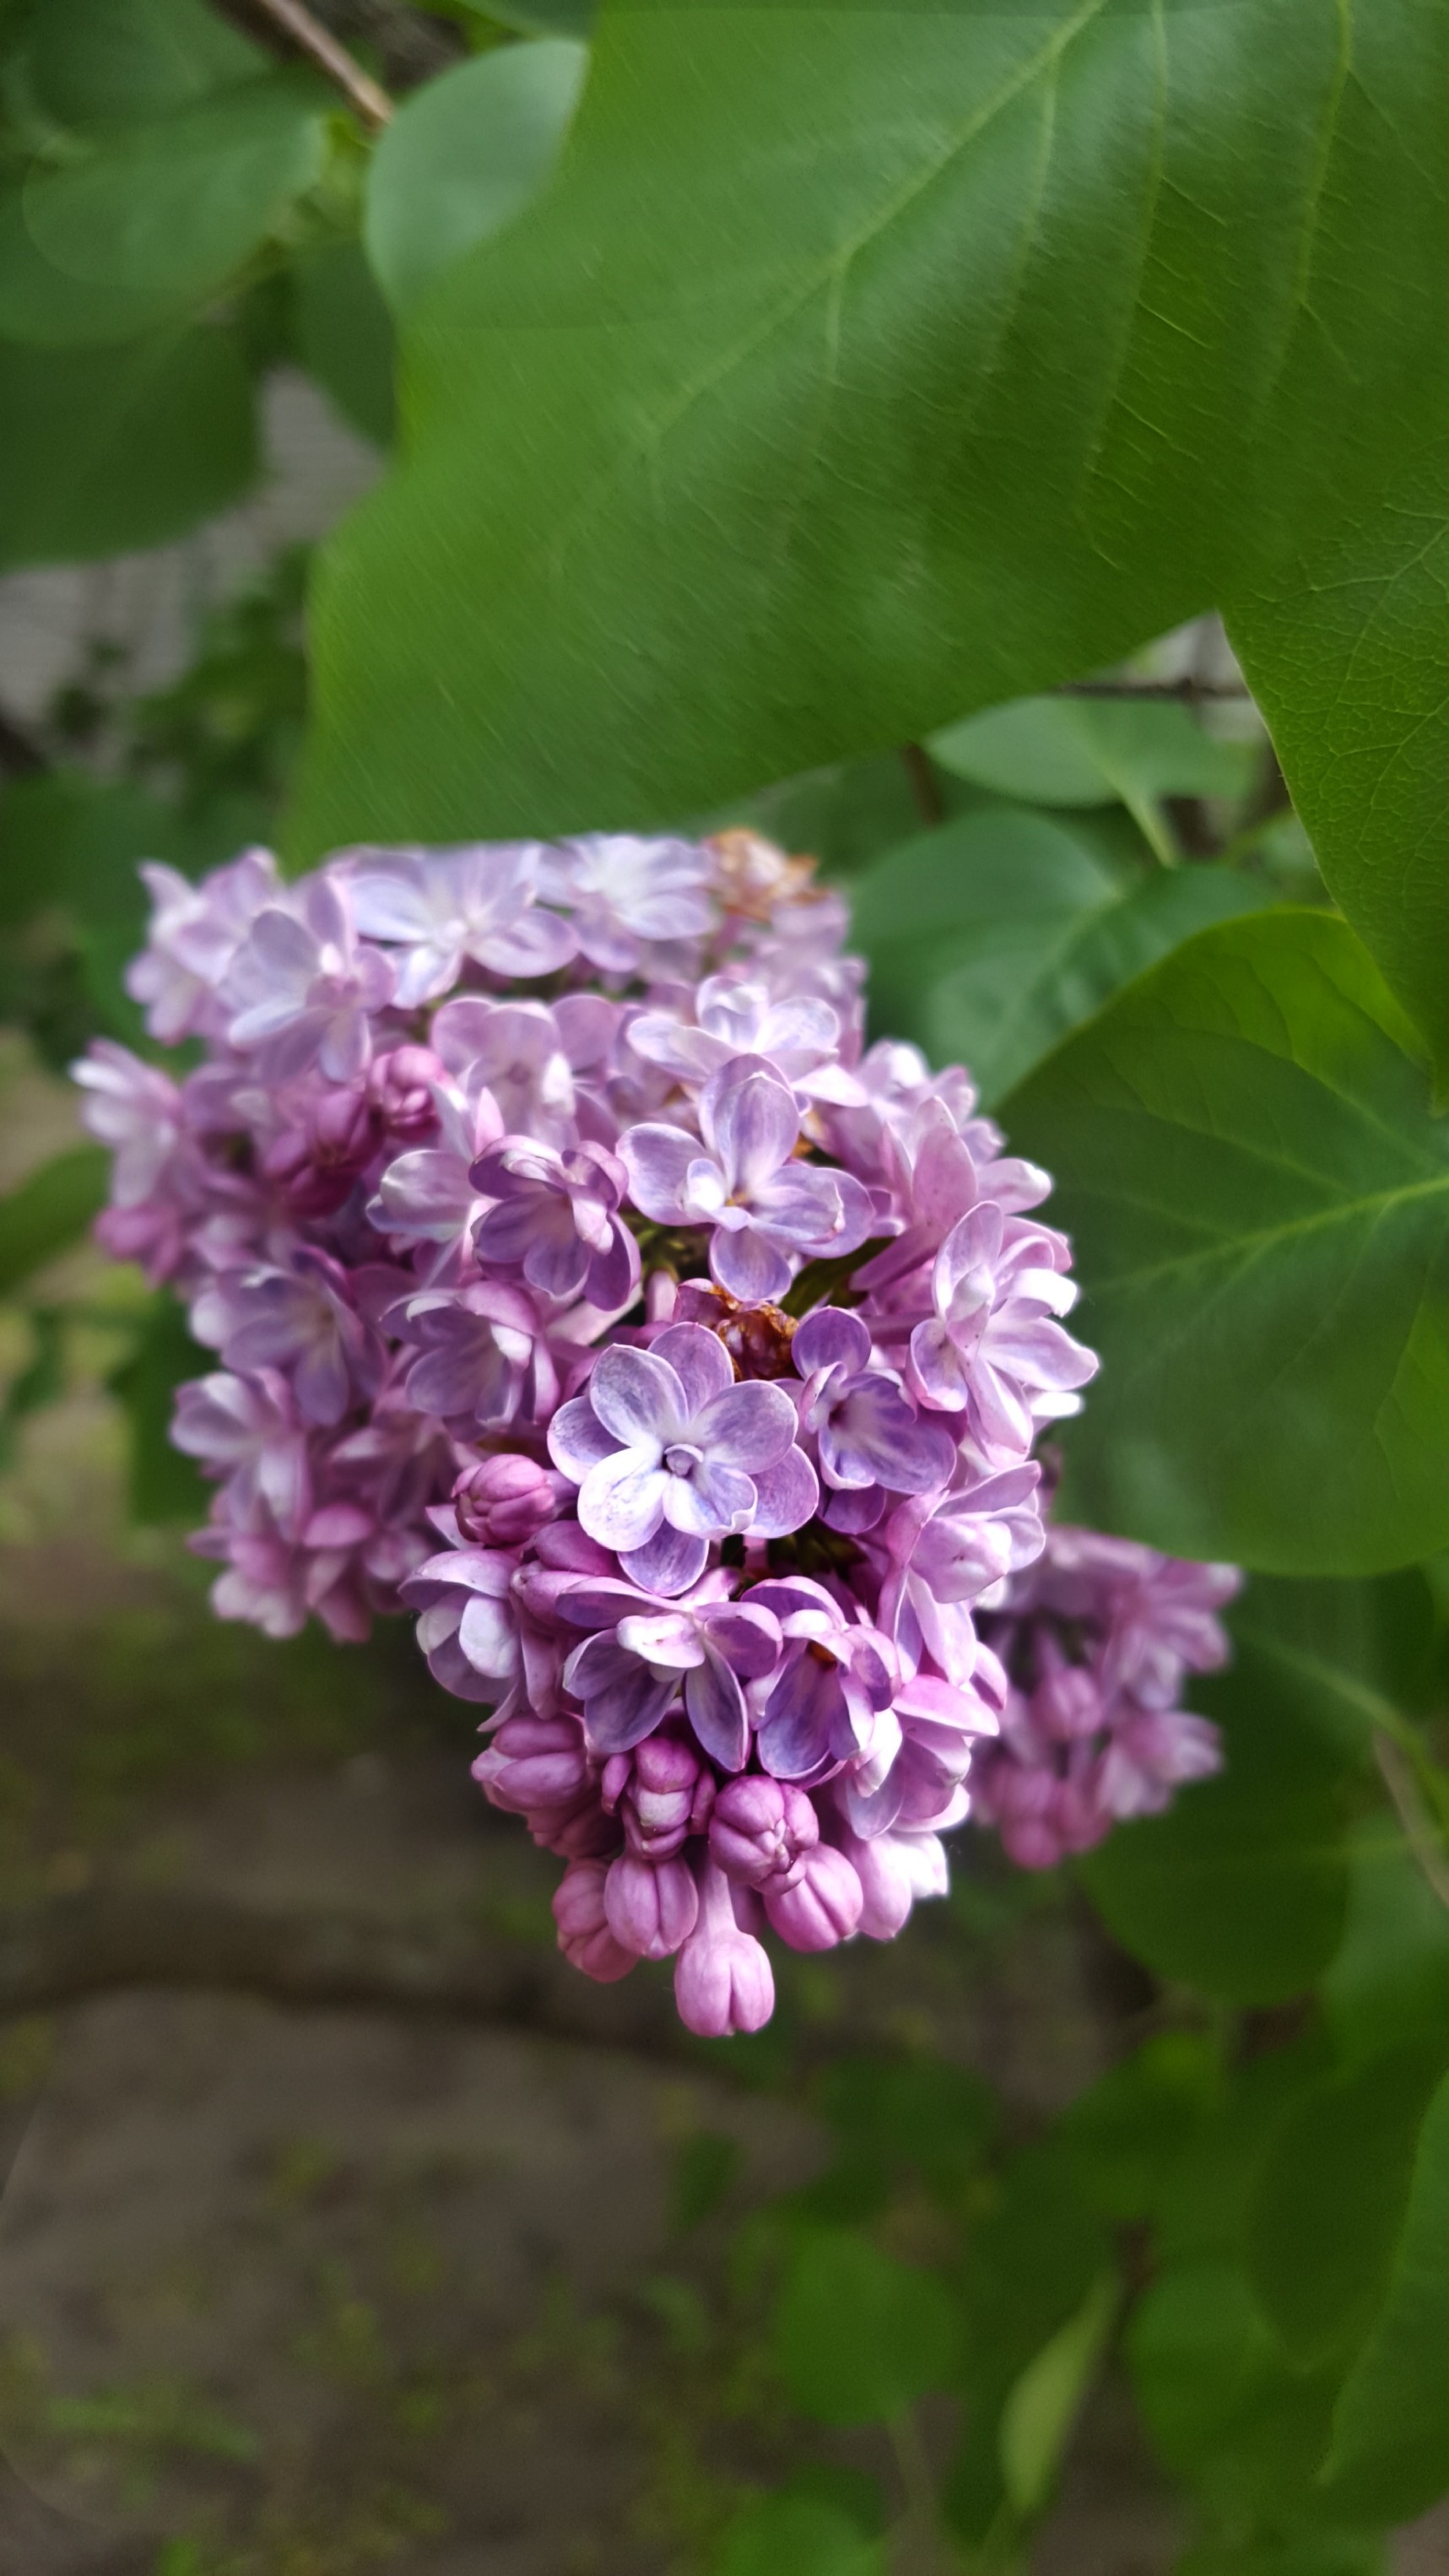  #freetoedit #bunia0914 #myphoto #garden #mygarden #spring #springtime #nature #plant #plants #flowers #flower #tree #lilac #pink #purple #pinkflower #lil